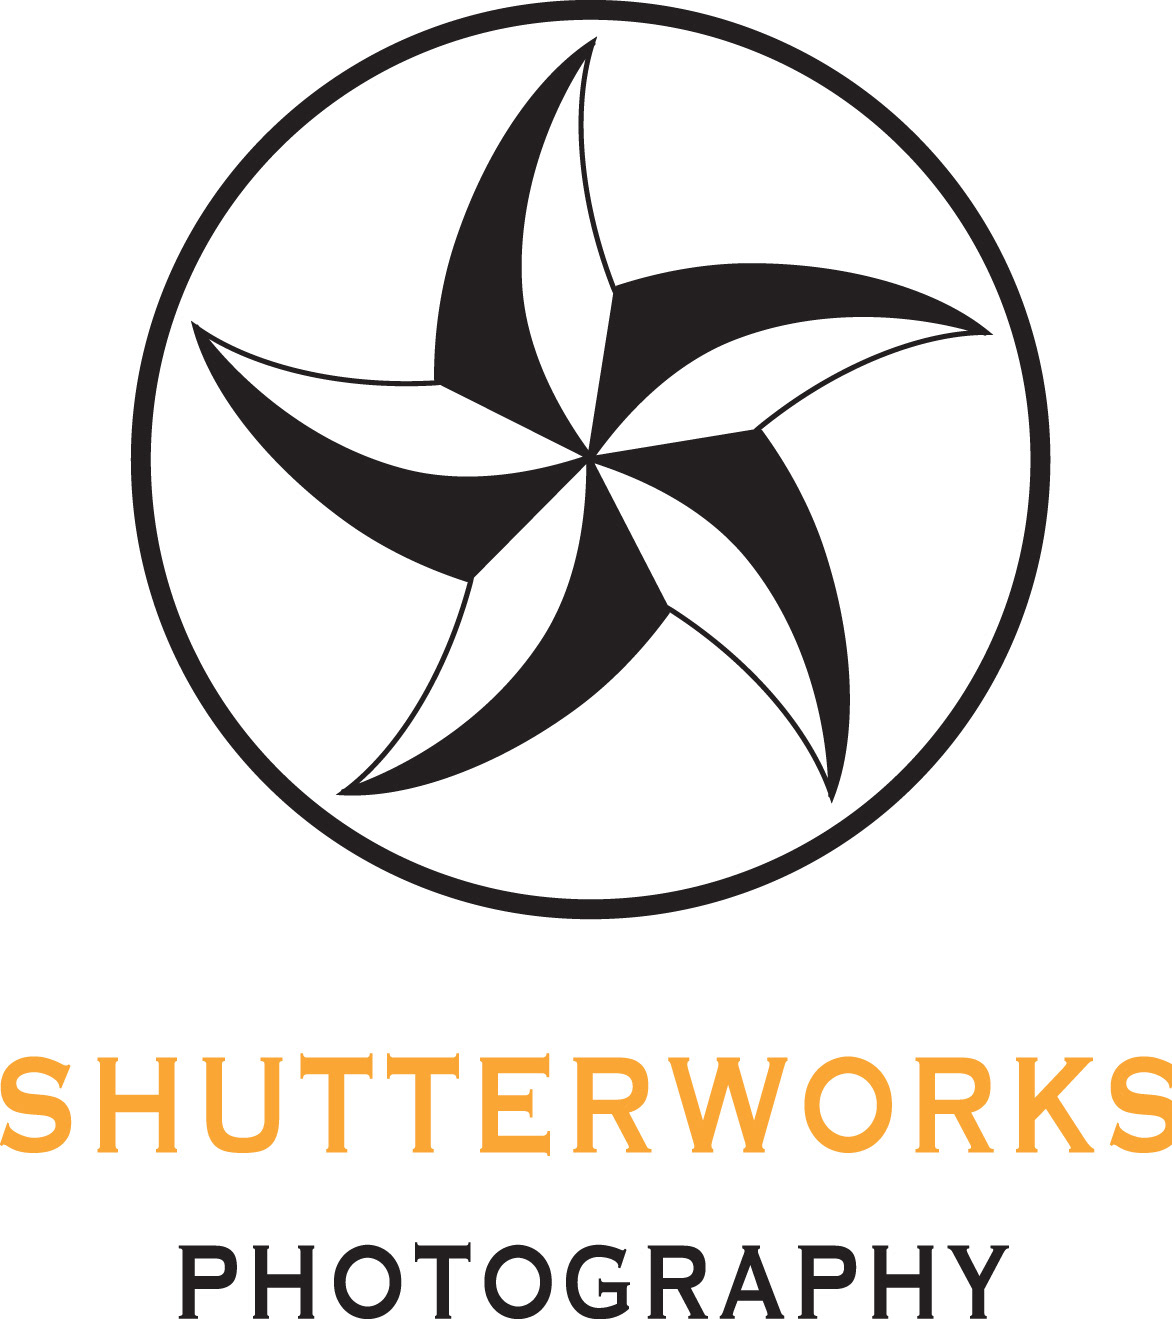 Shutterworks Photography